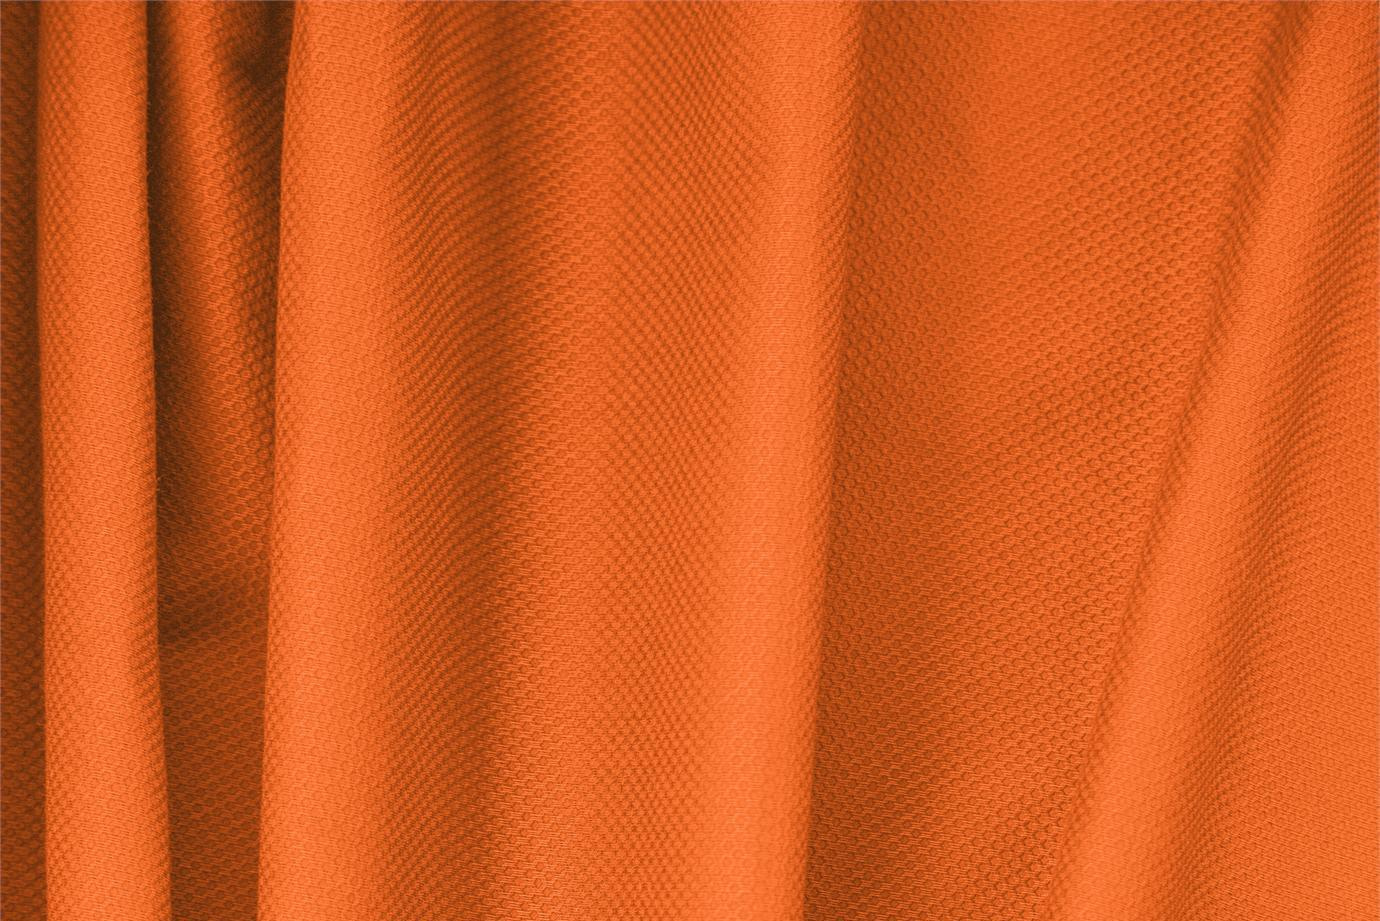 Tessuto Piquet Stretch Arancione Mandarino in Cotone, Stretch per abbigliamento